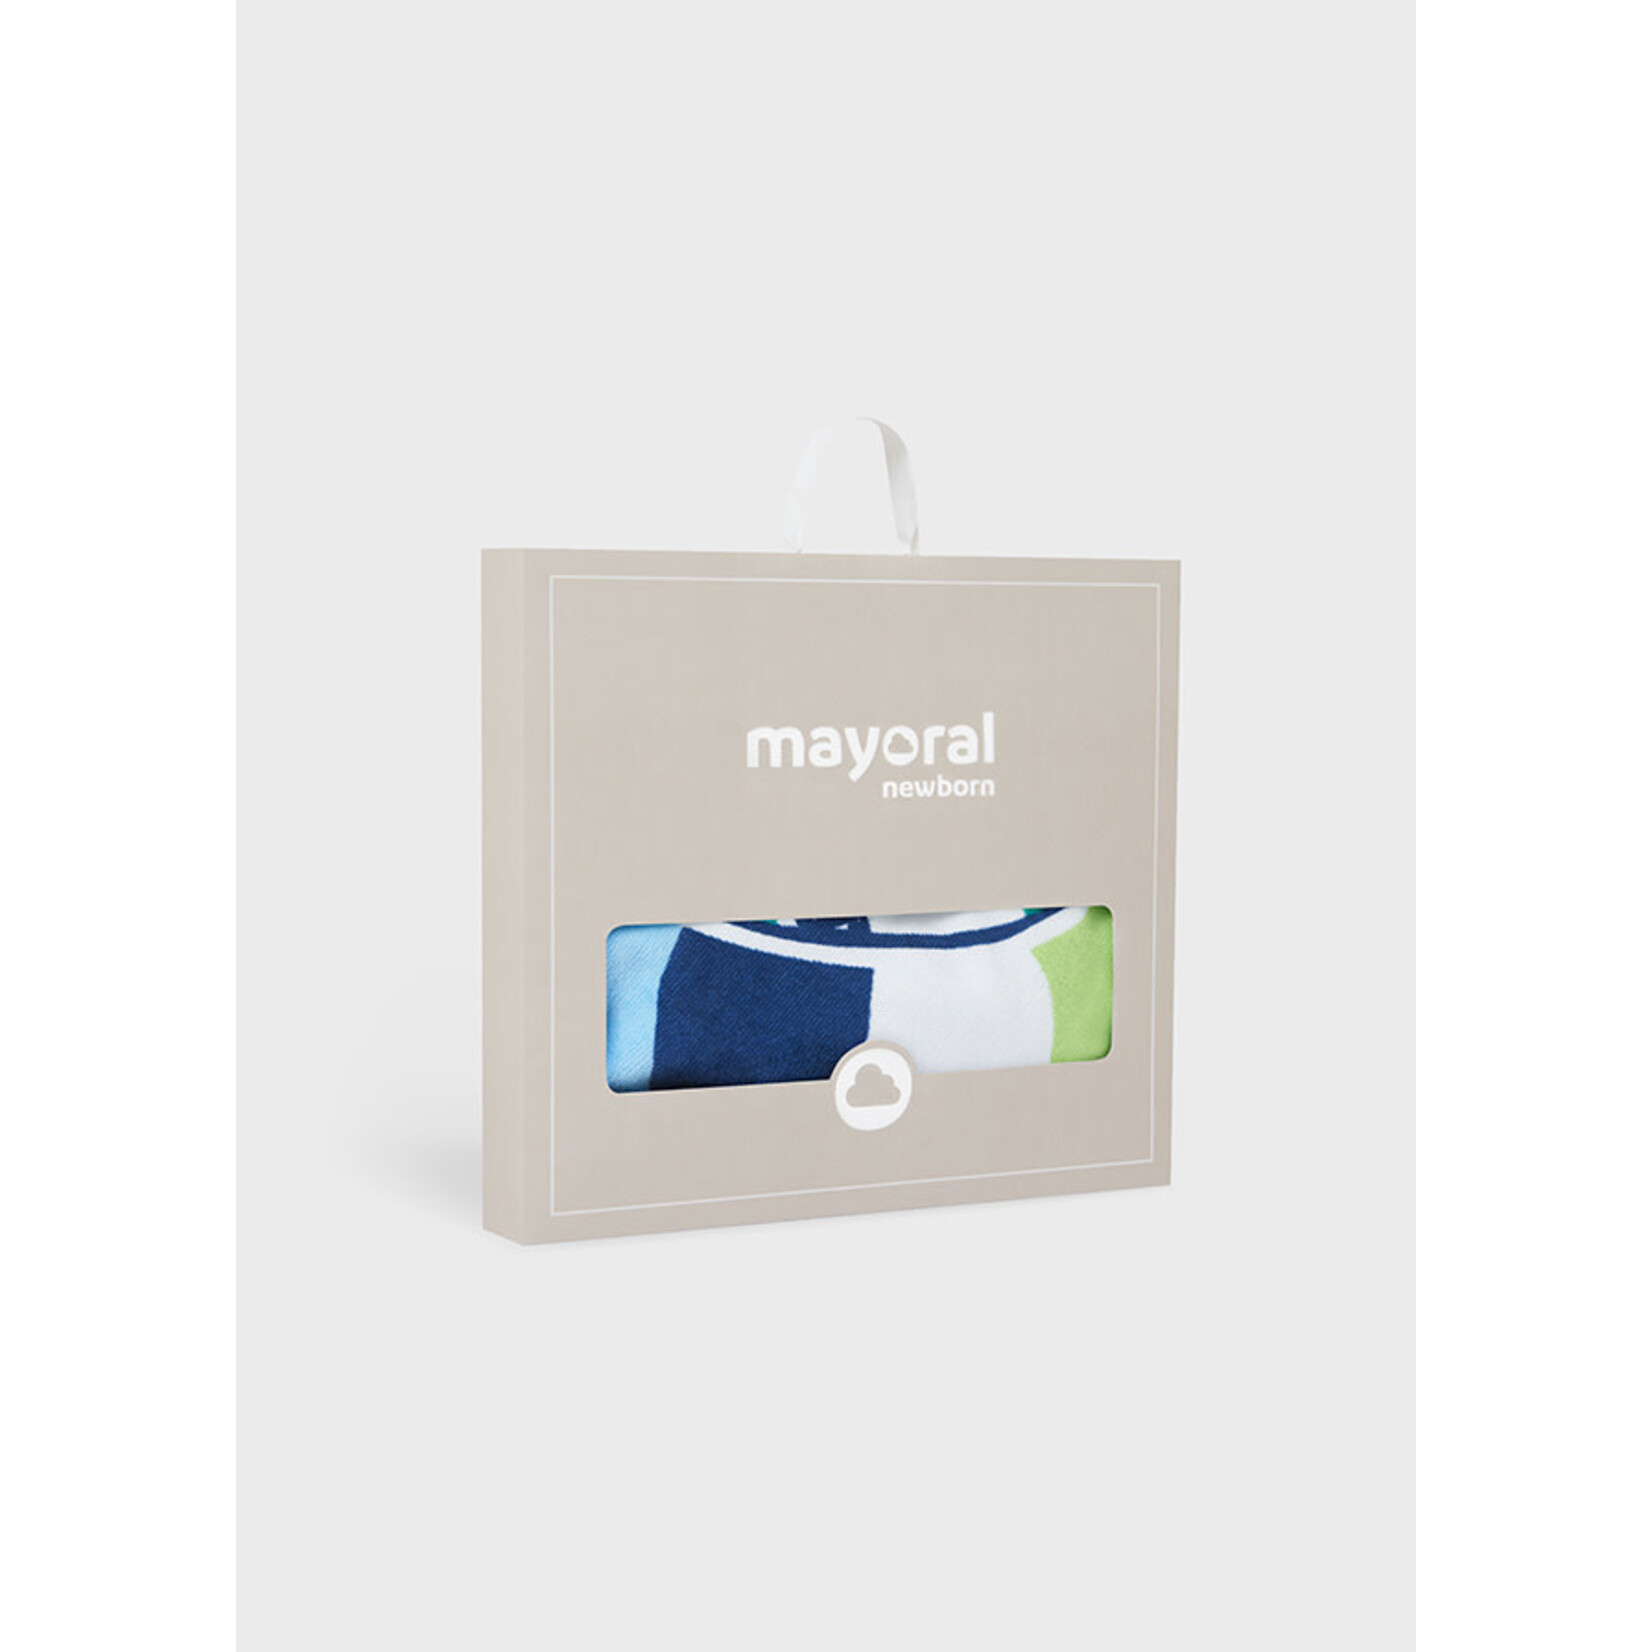 Mayoral Mayoral- Newborn- Ecofriends Hooded Towel